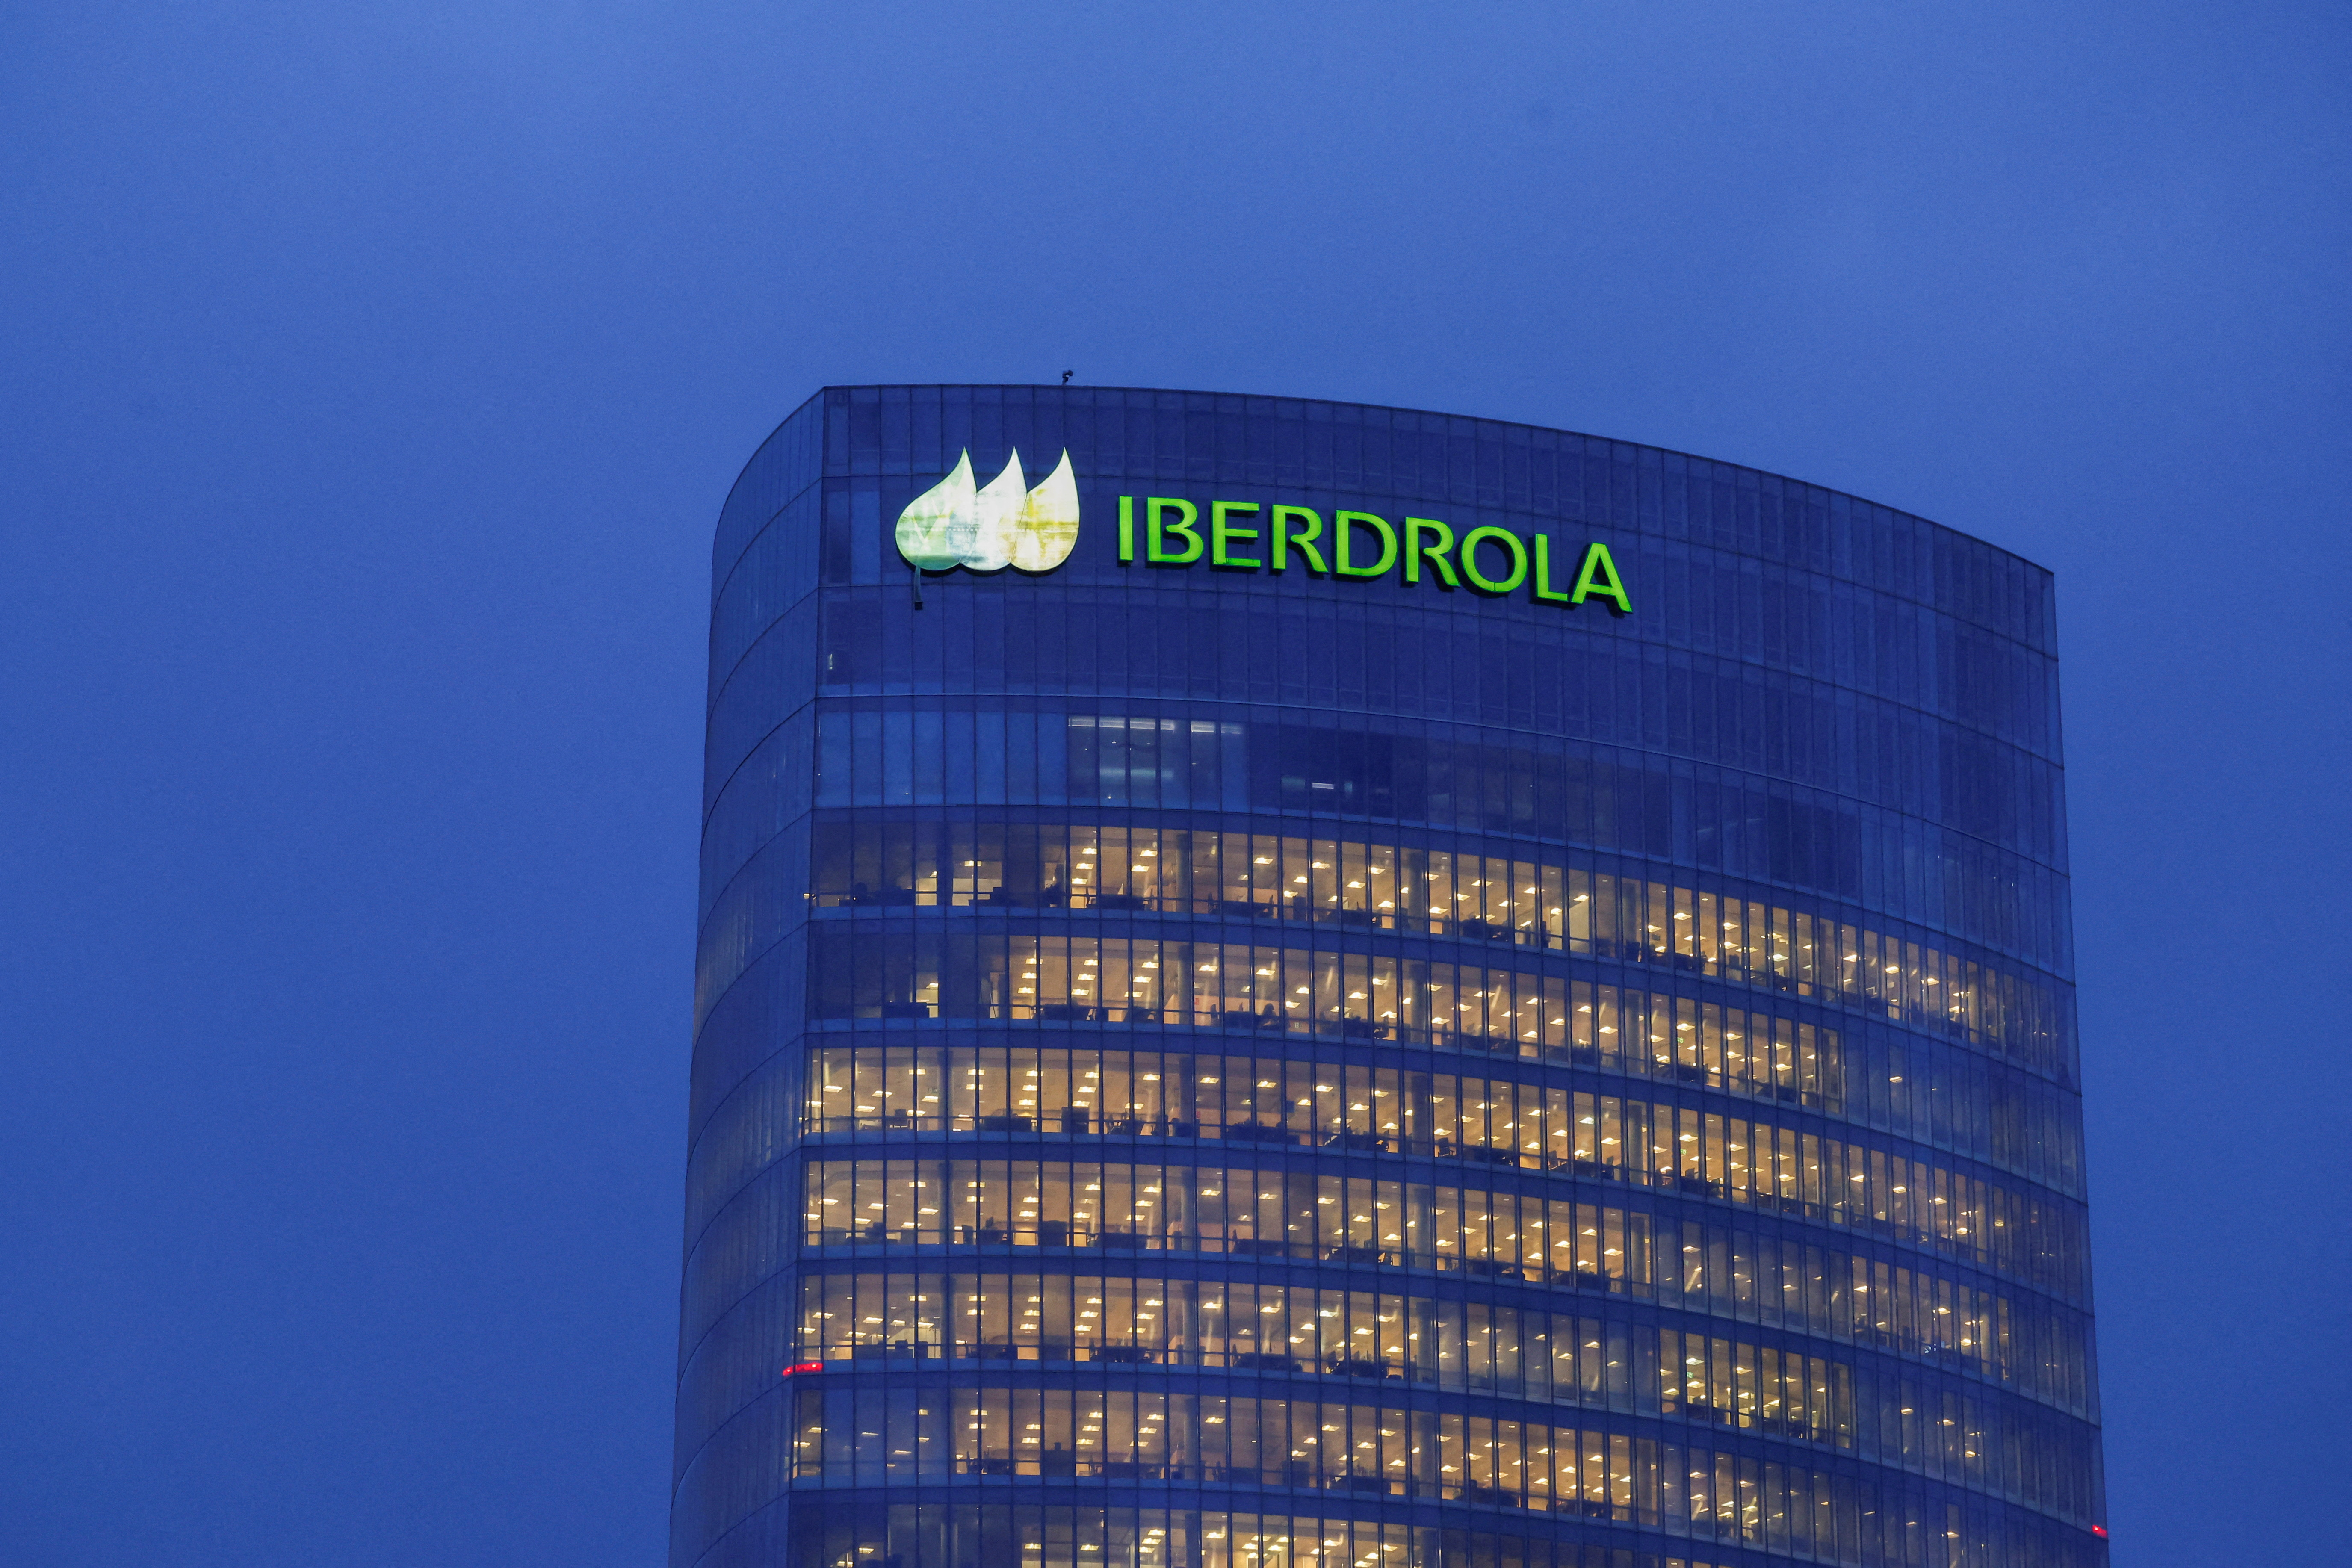 Logotype of Spanish utilities company Iberdrola is illuminated atop the Iberdrola Tower, in Bilbao